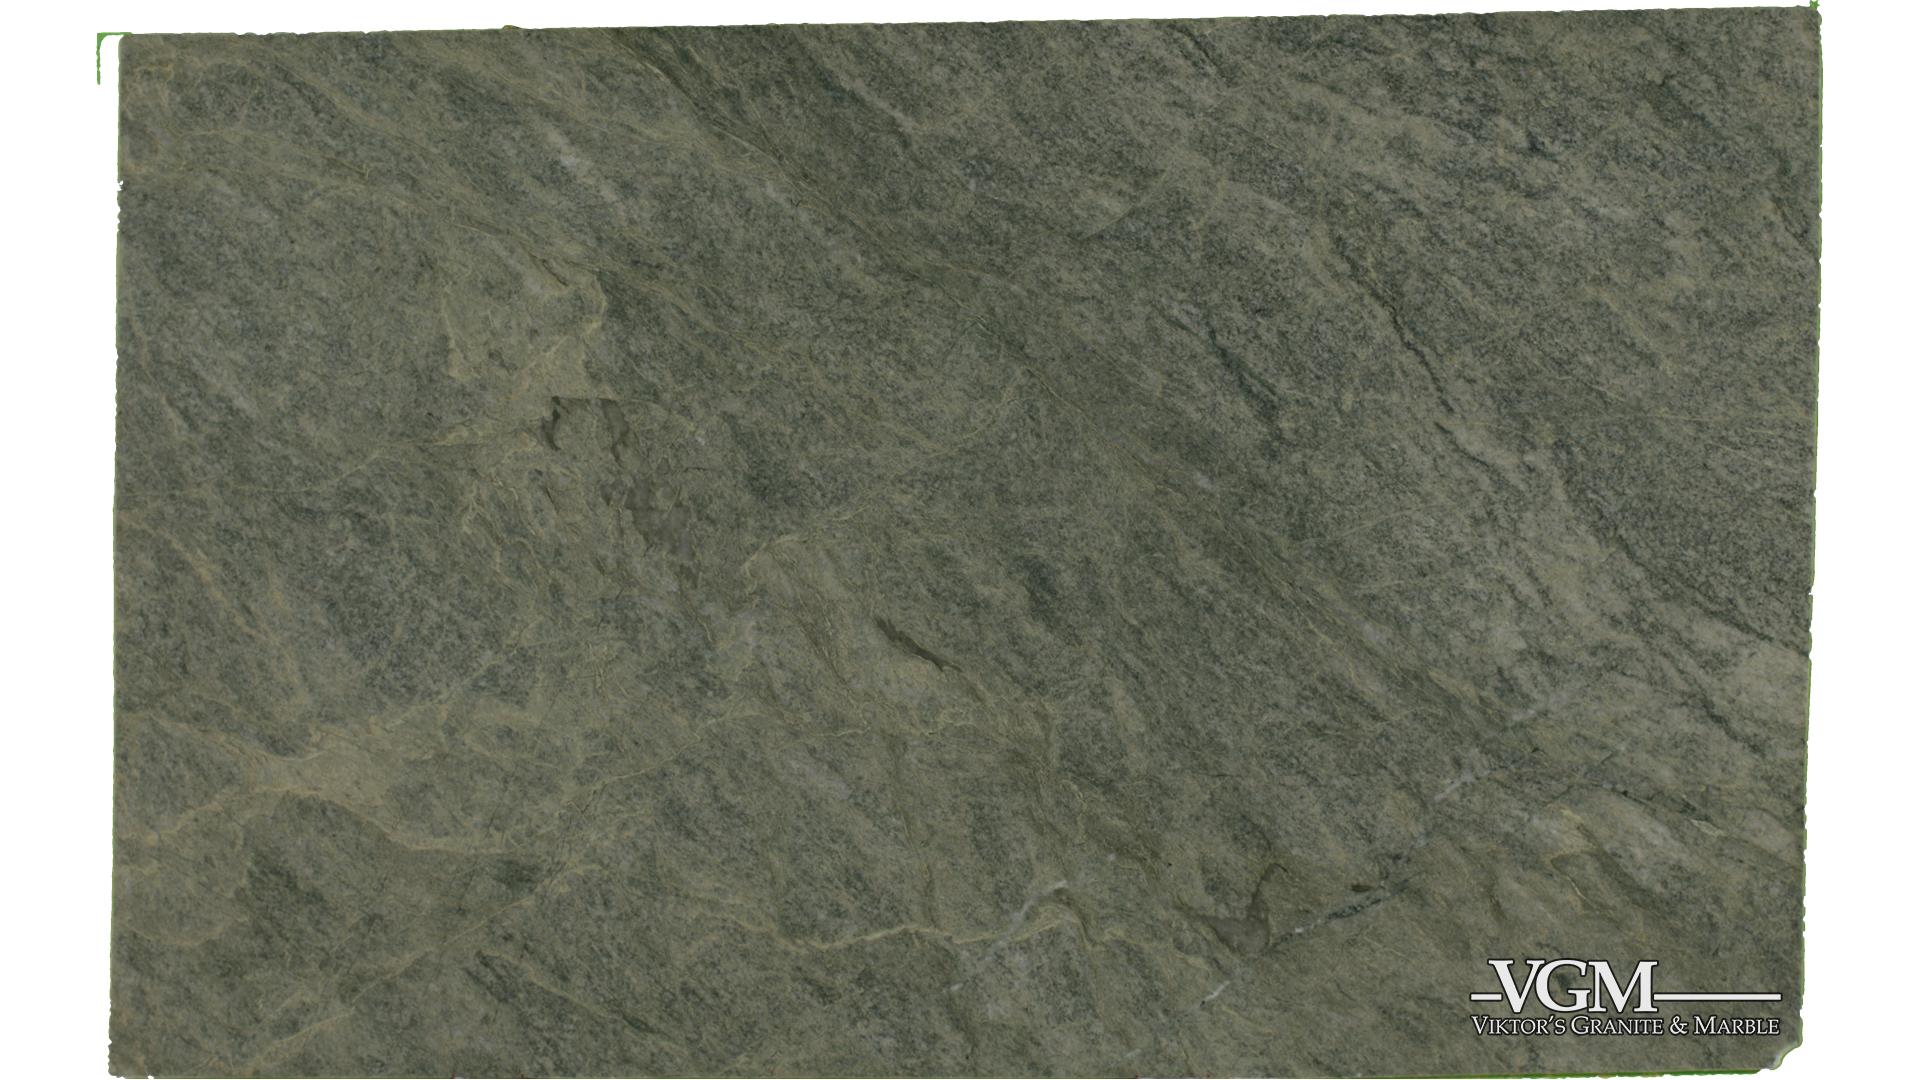 Costa Smeralda Granite Slabs